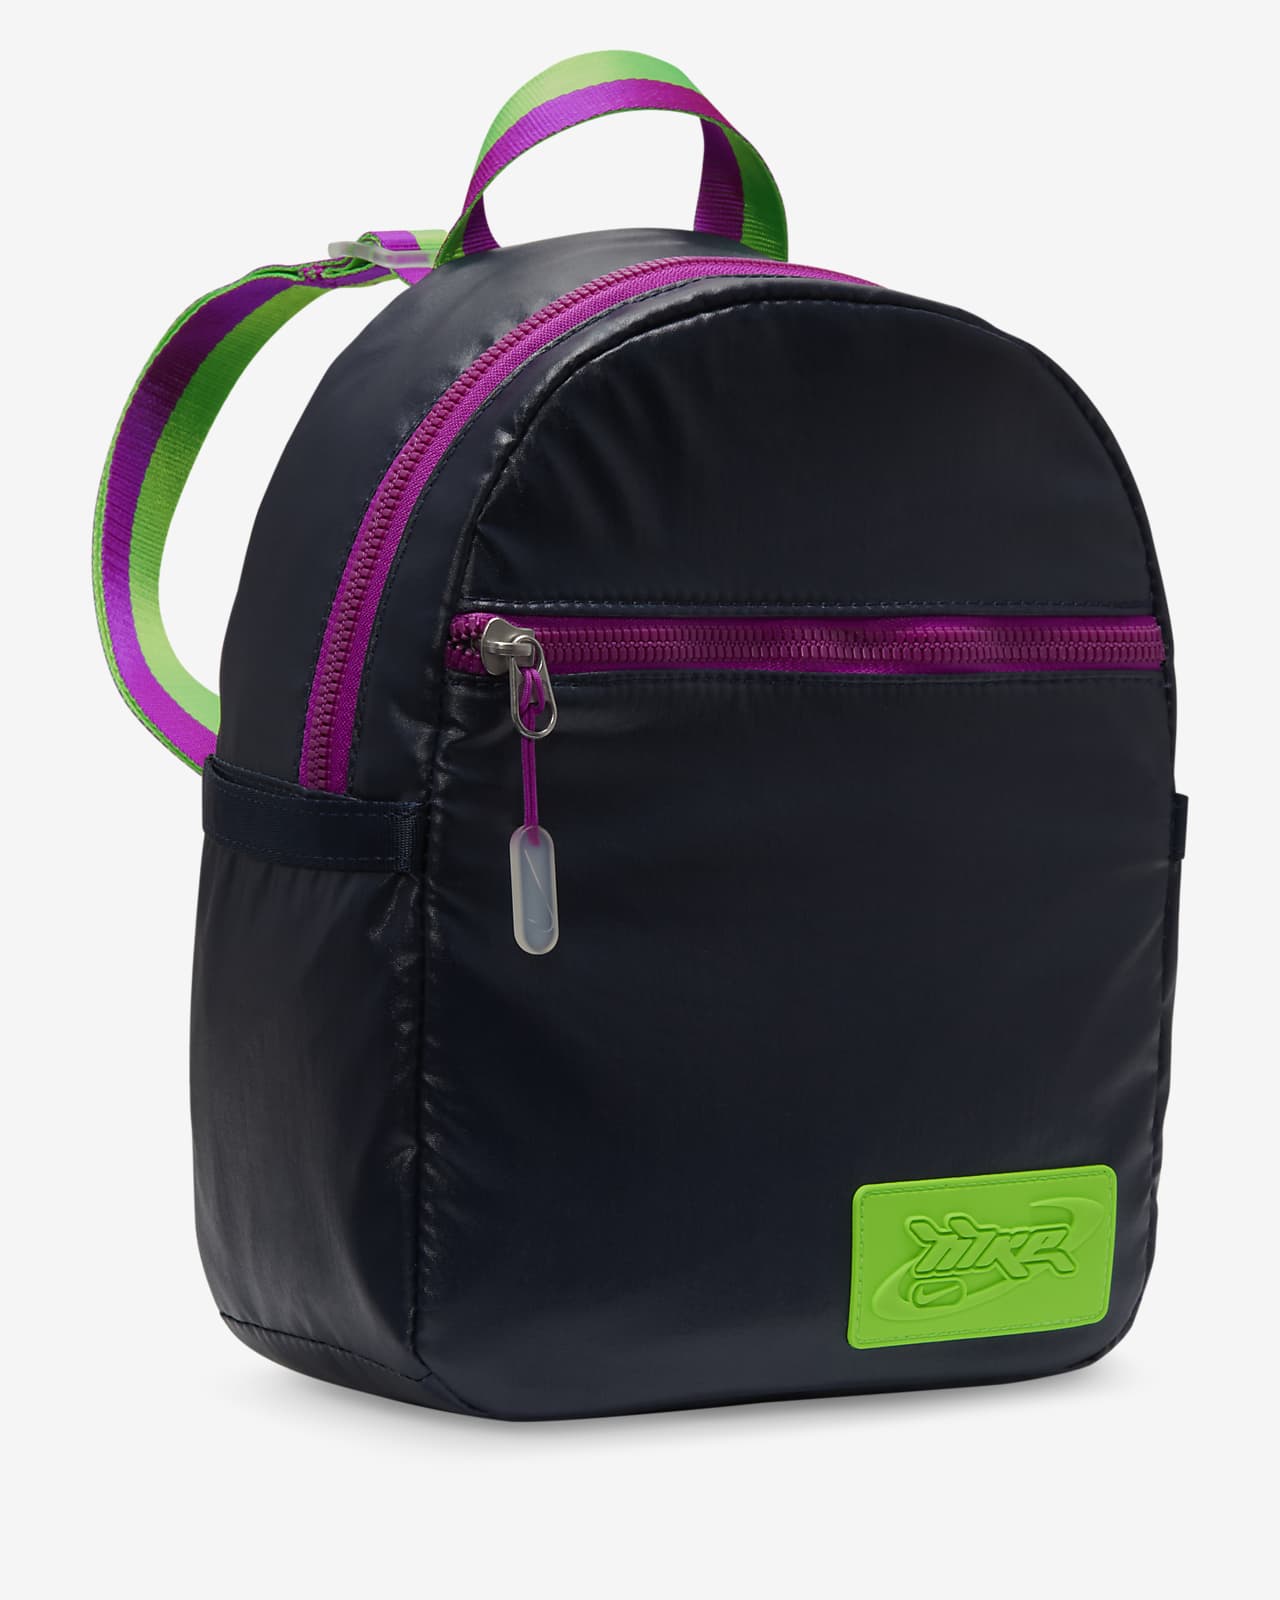 Nike Sportswear Futura 365 Mini Backpack (6L)